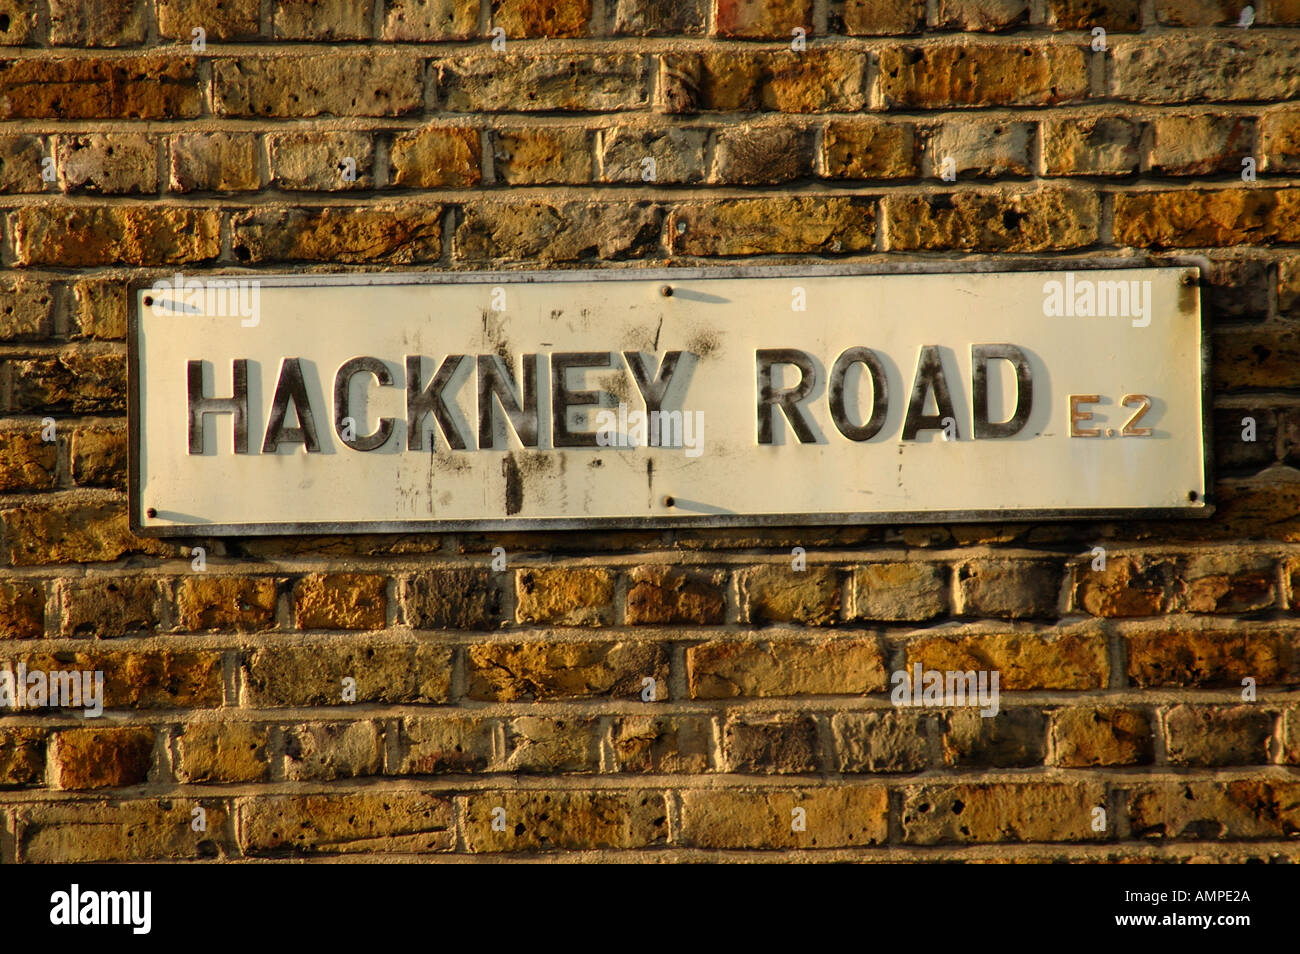 Hackney Road sign Stock Photo